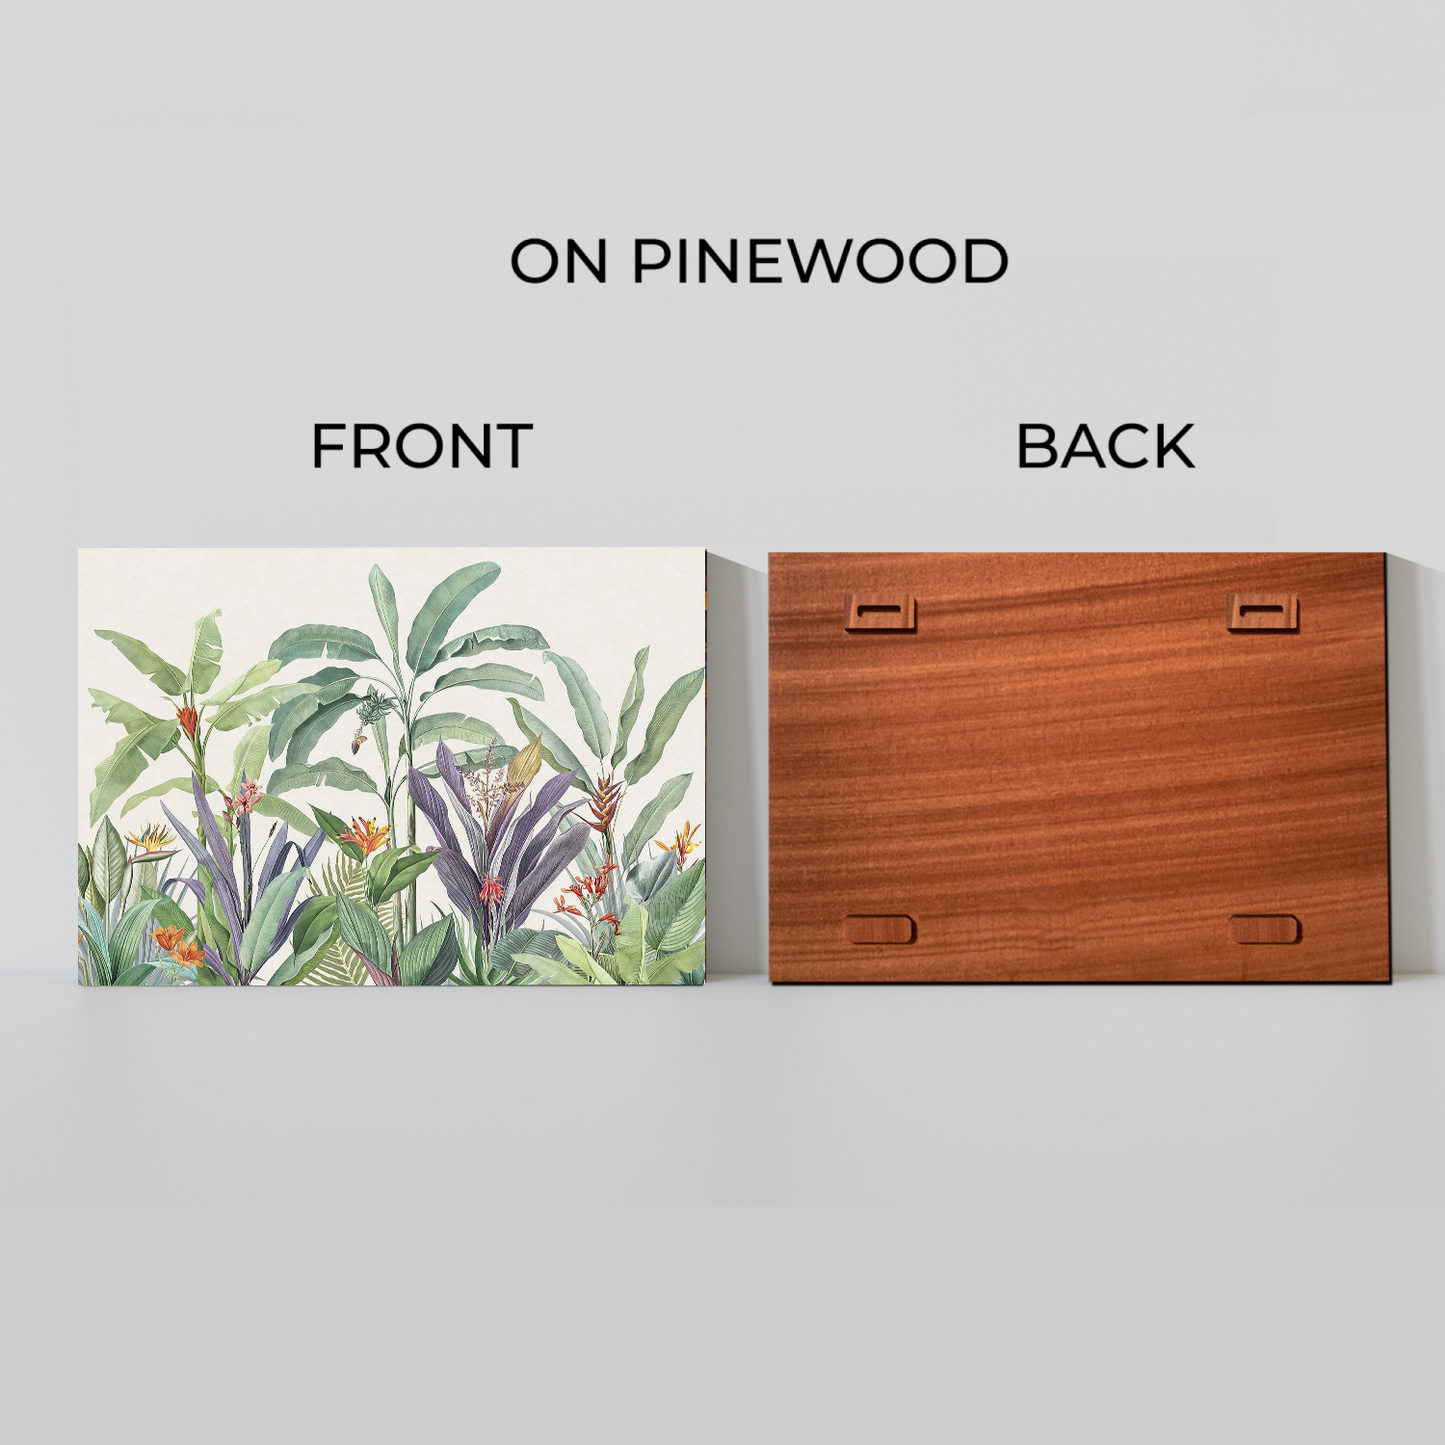 Tropical Plant Wood Print Wall Art